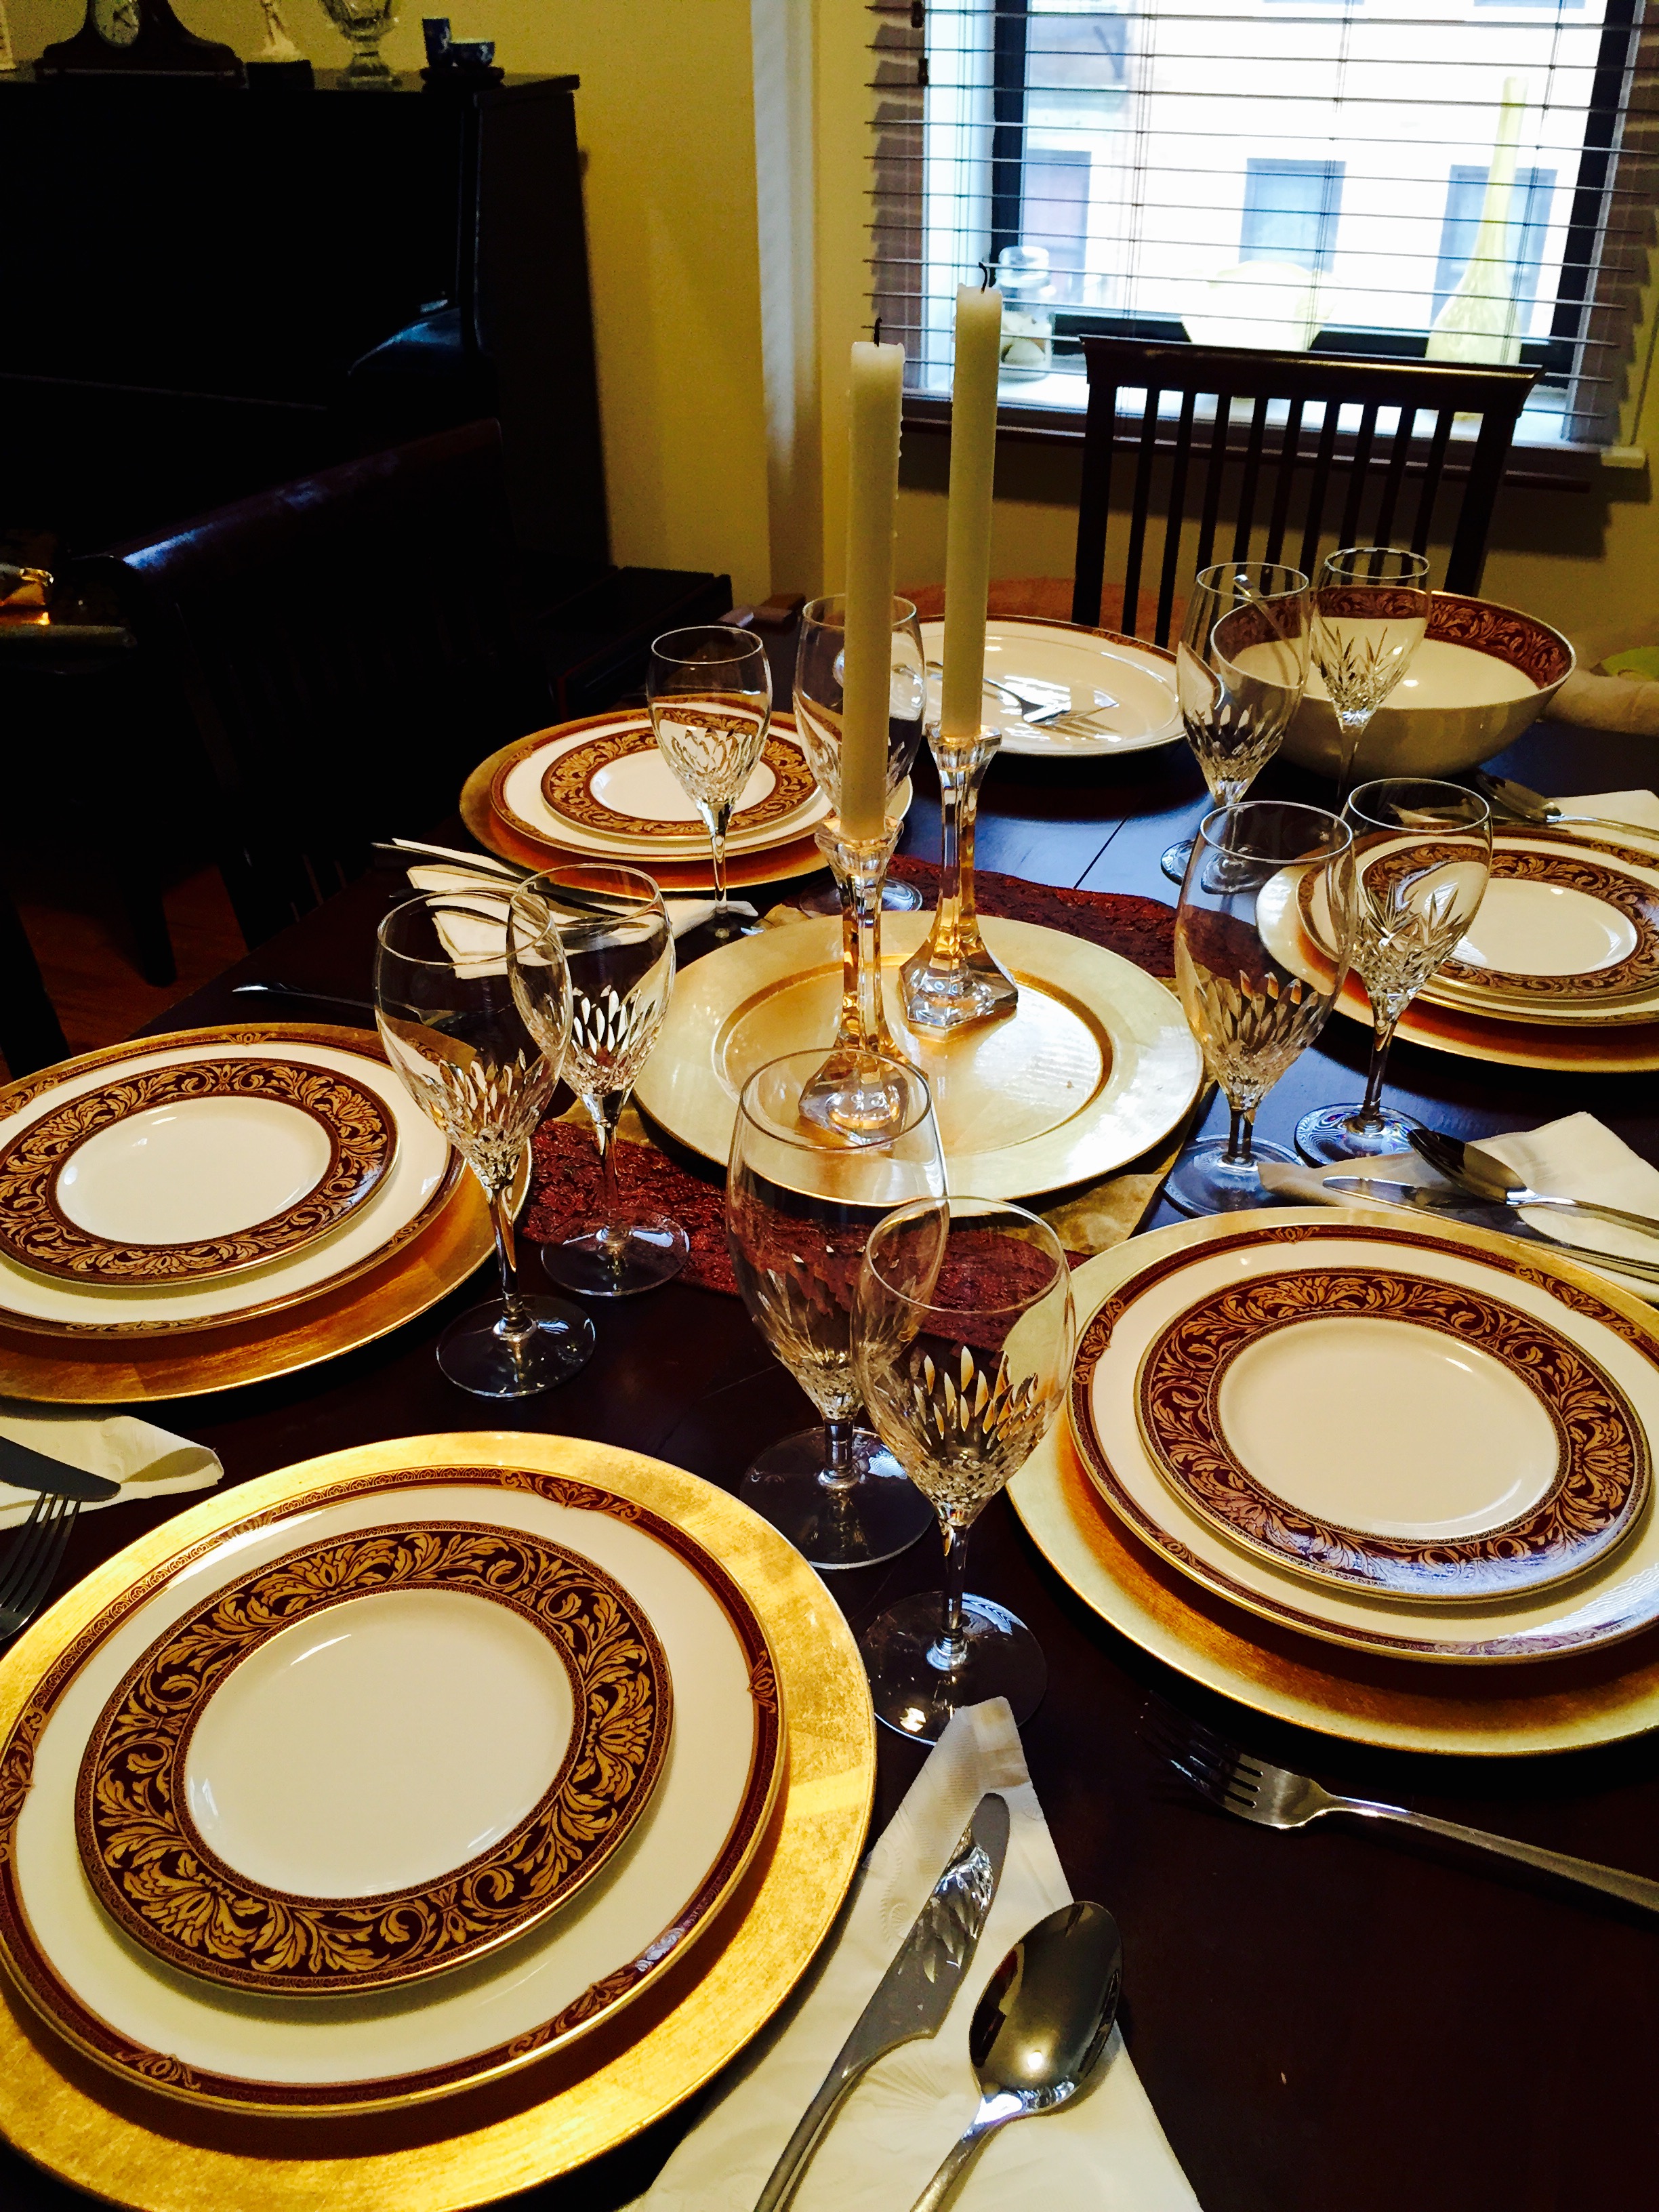 Hosting an elegant dinner party at home